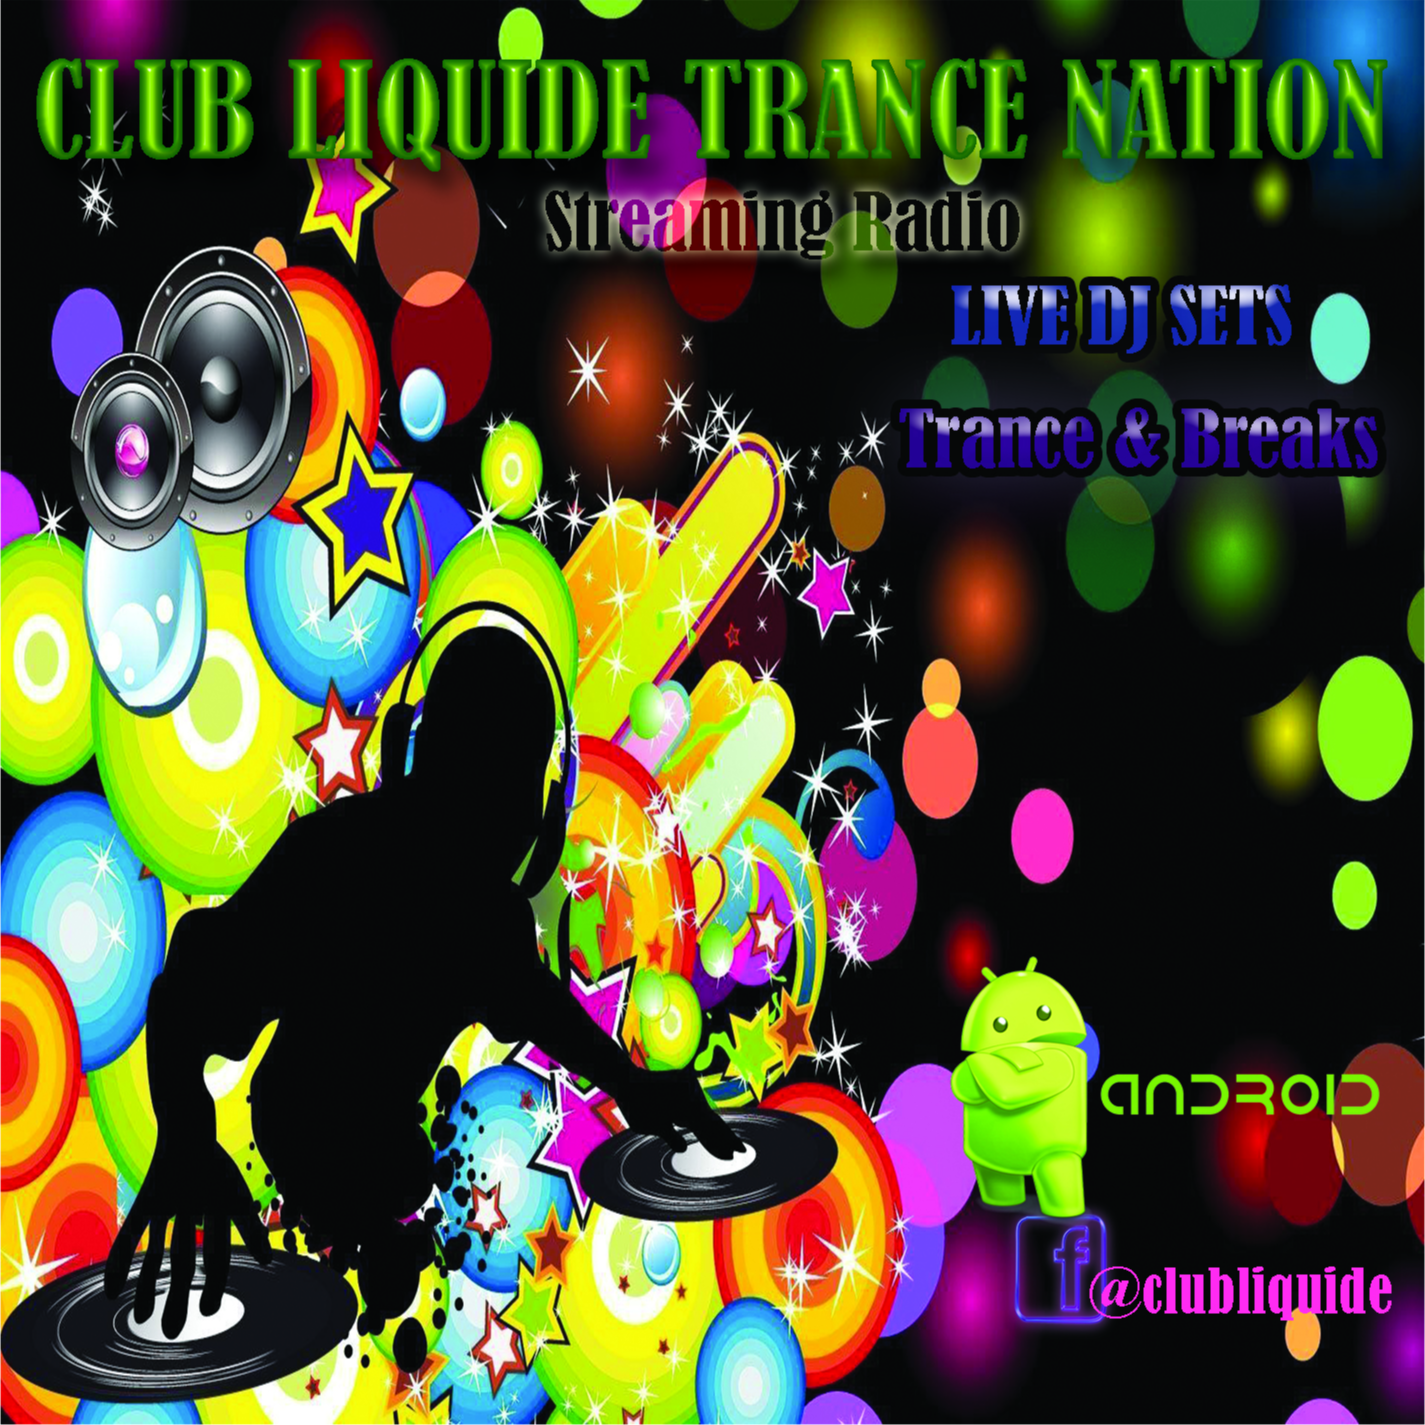 Club Liquide Trance Nation